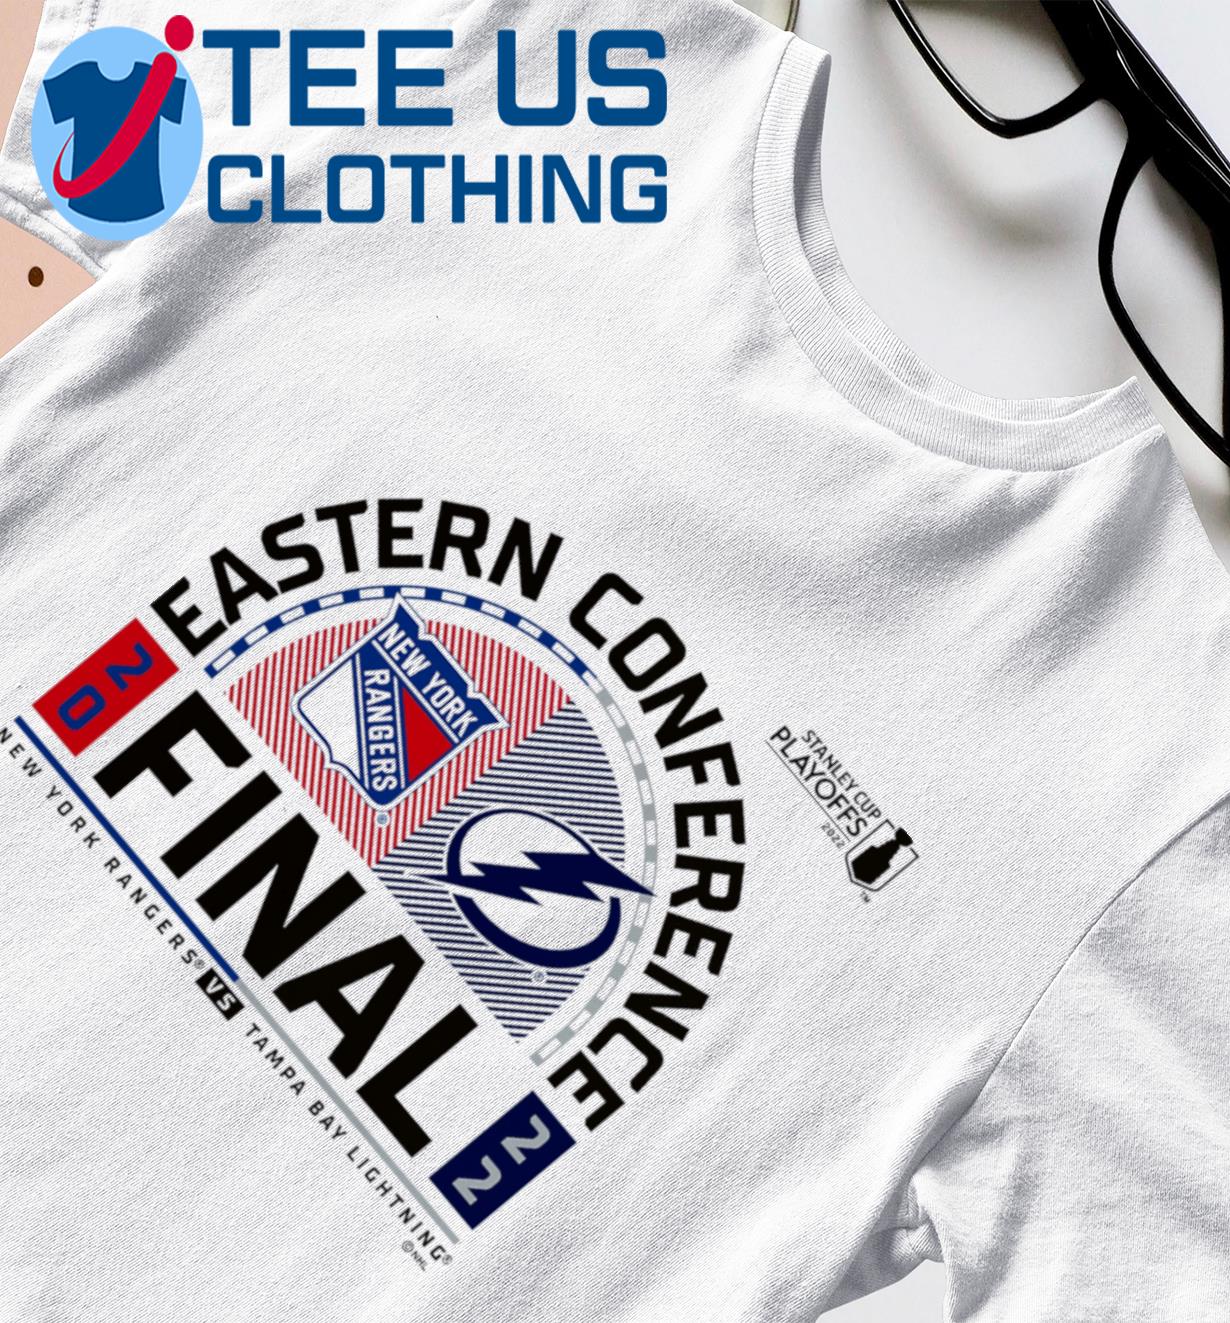 Rangers vs Lightning 2022 Eastern Conference Finals Shirt